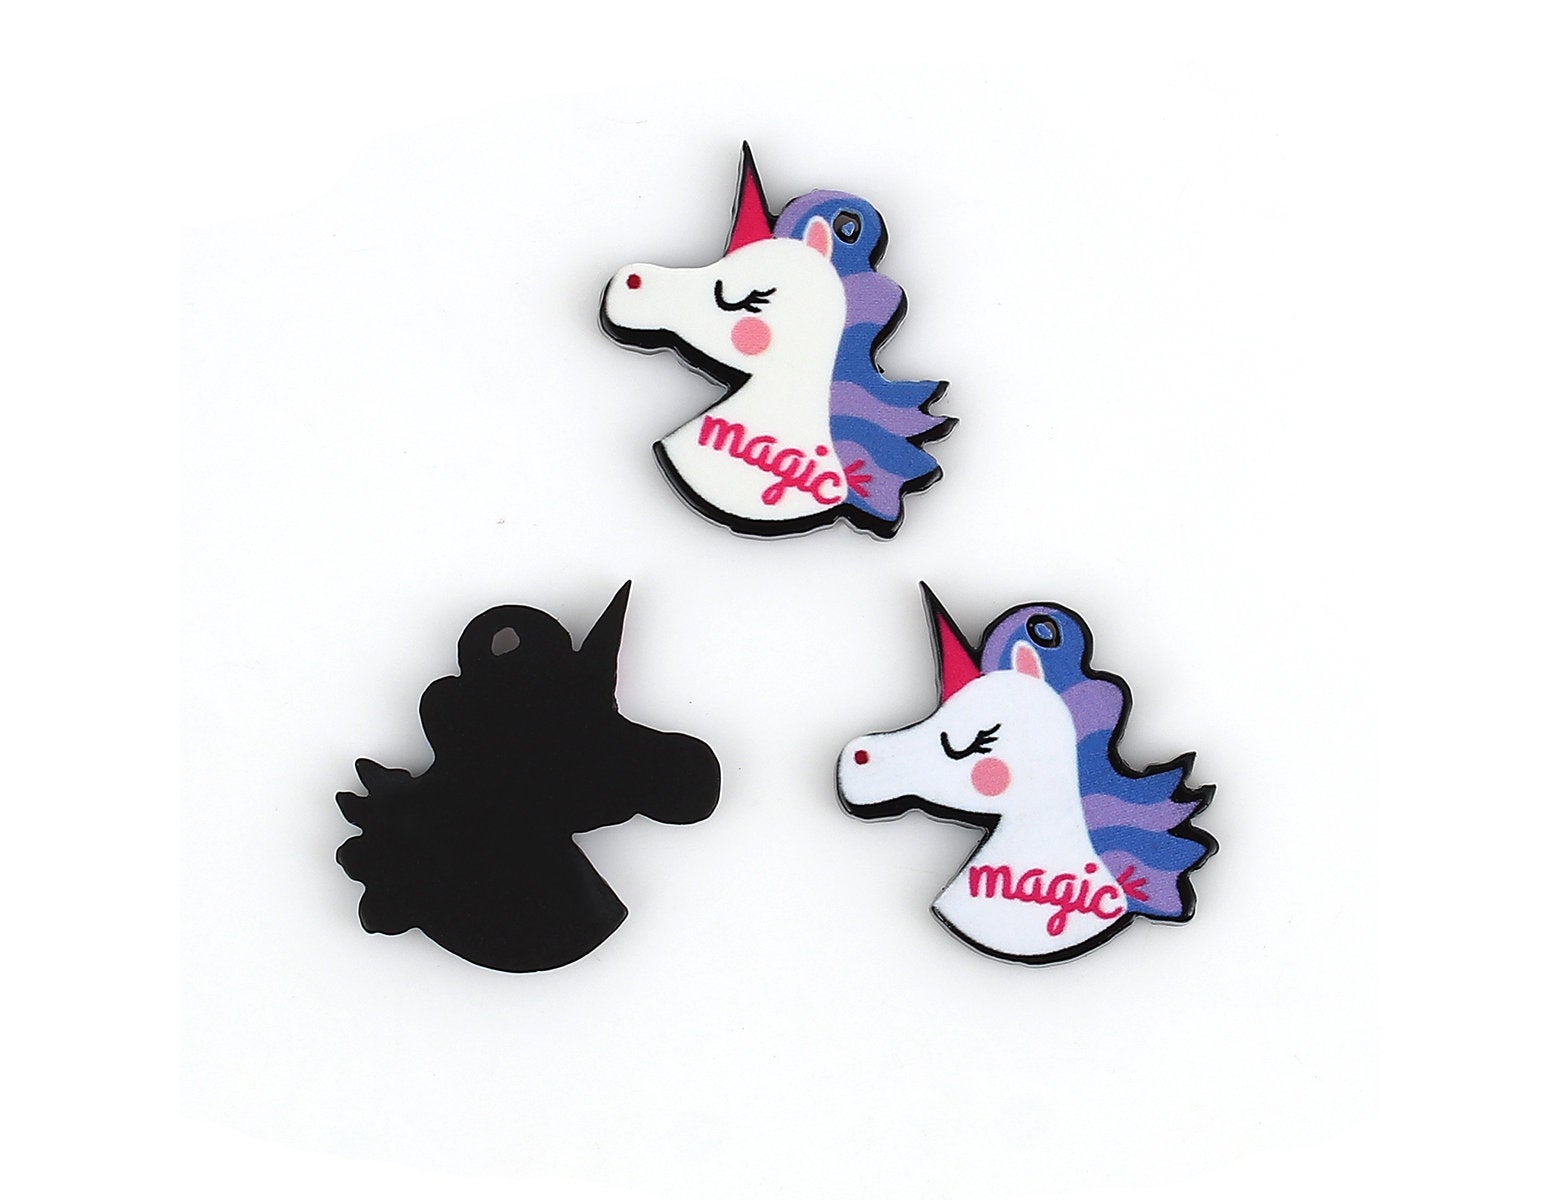 Magic unicorn charm, 5 acrylic unicorn charms